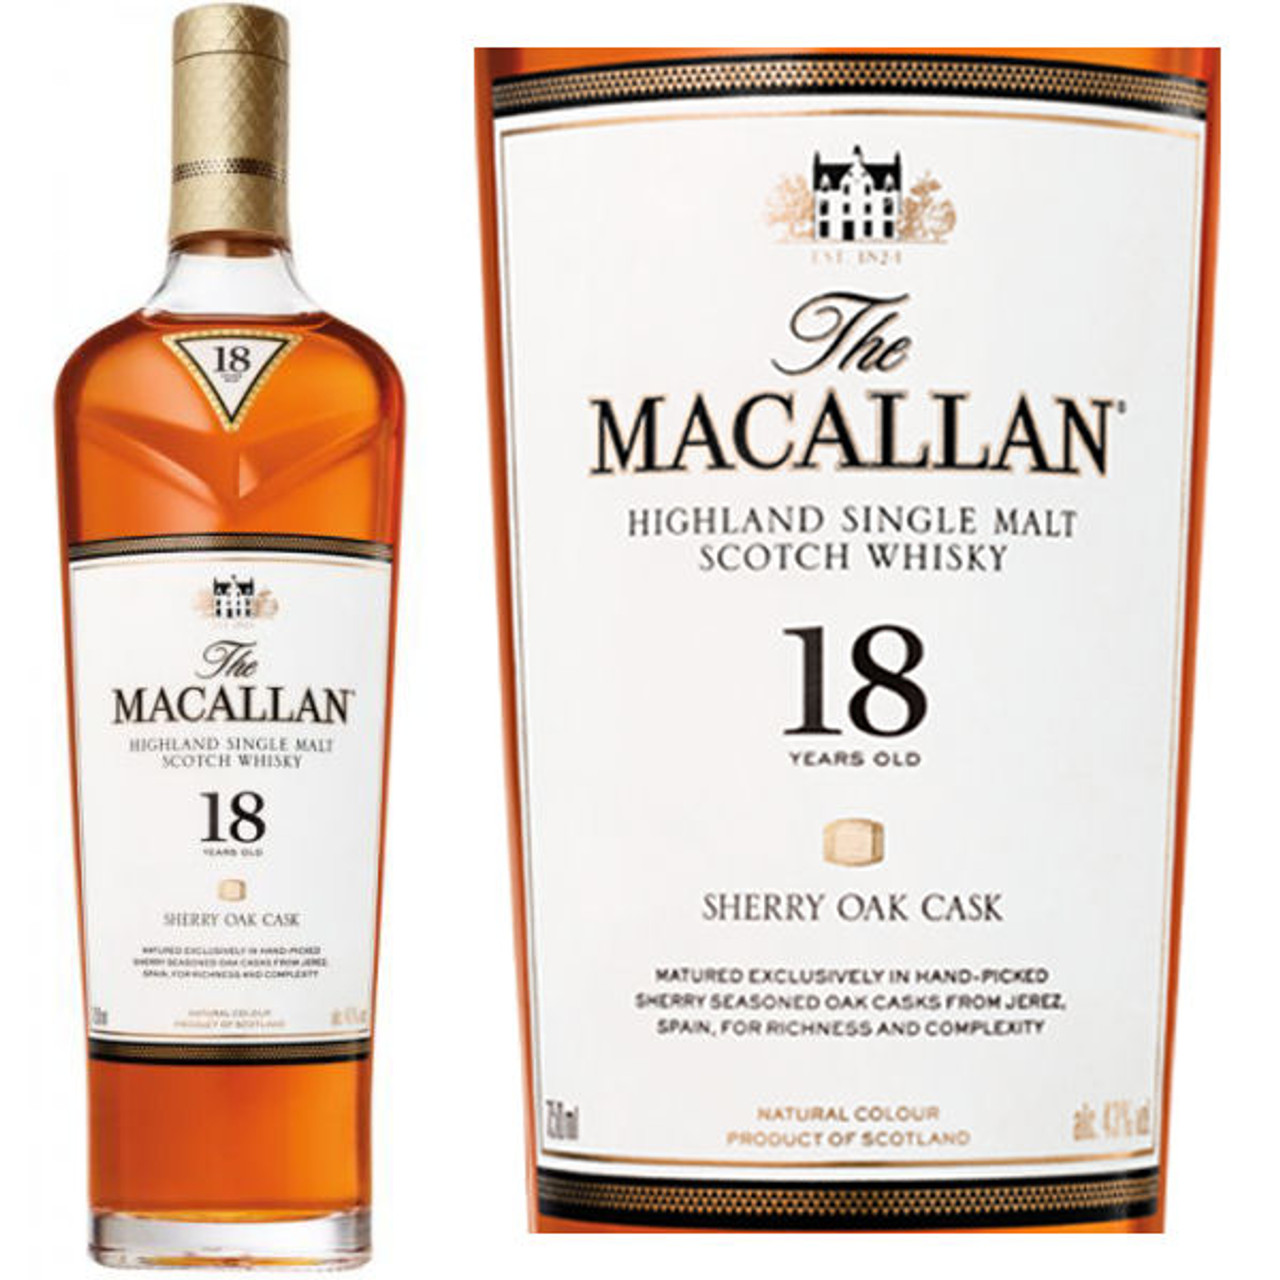 The Macallan Sherry Oak 25 Year Old Single Malt Whisky 750ml